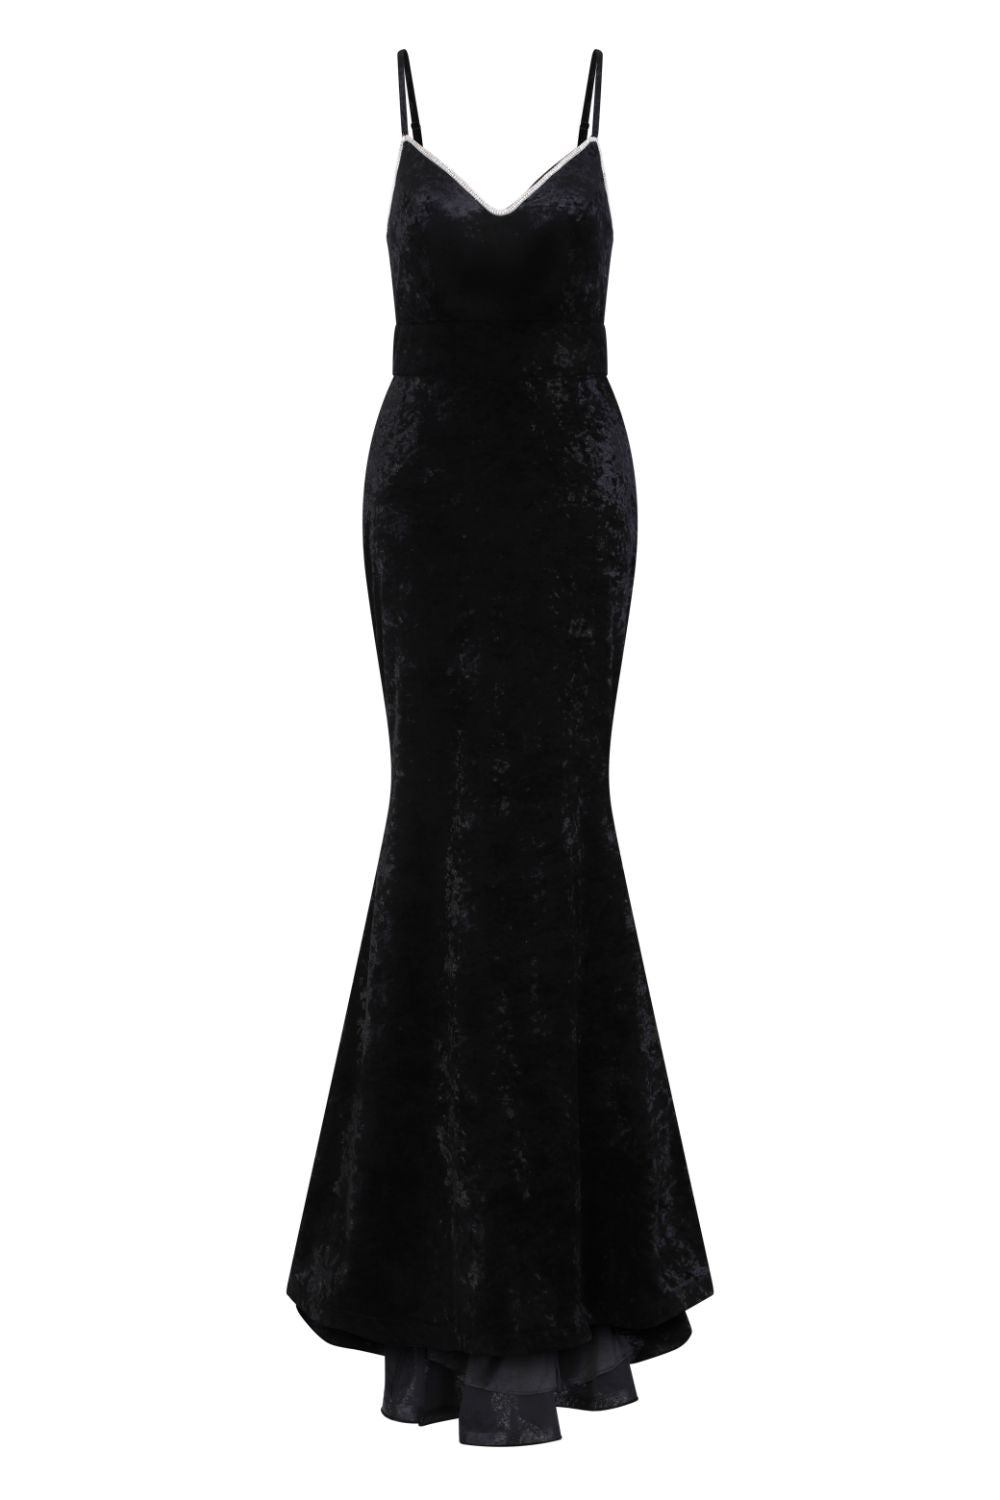 Irreplaceable Luxe Black Velvet Crystal Sweetheart Fishtail Gown